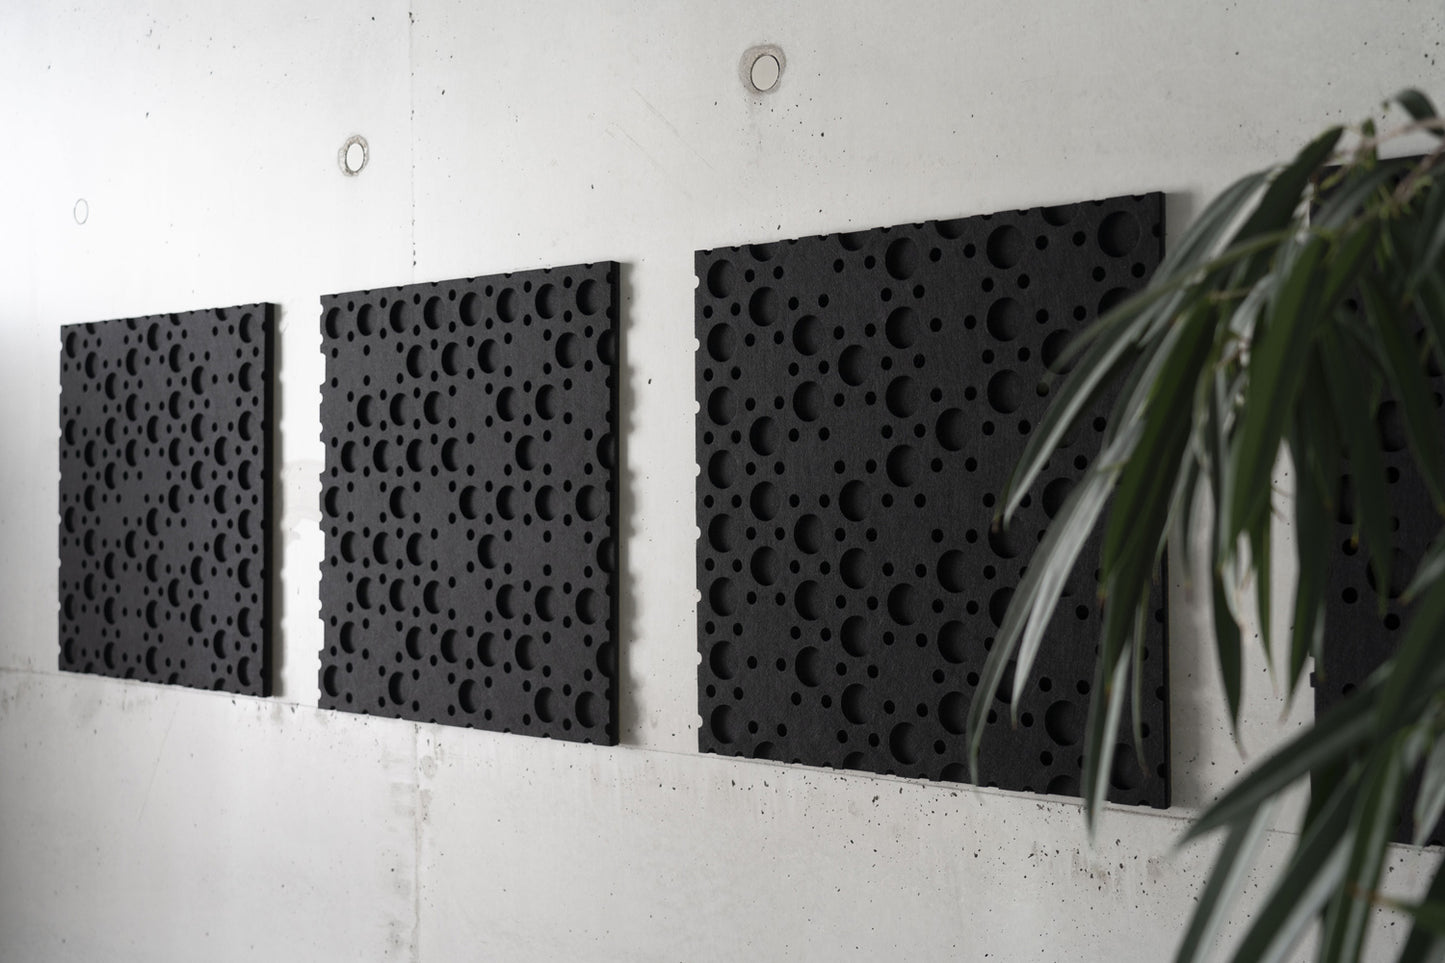 Self-adhesive Acoustic Felt Panel Circles Black 18mm